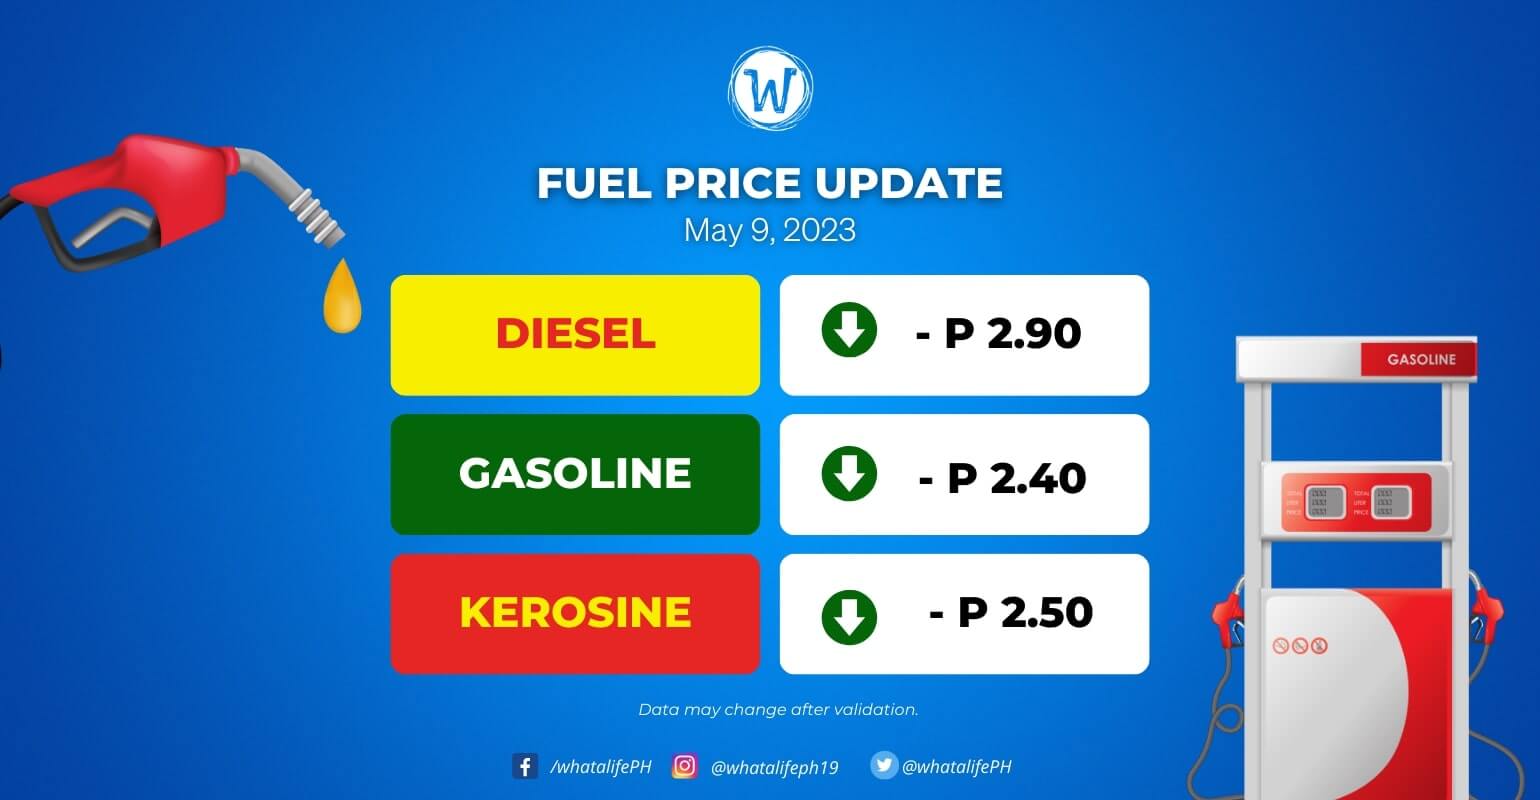 Fuel price adjustment effective May 9, 2023